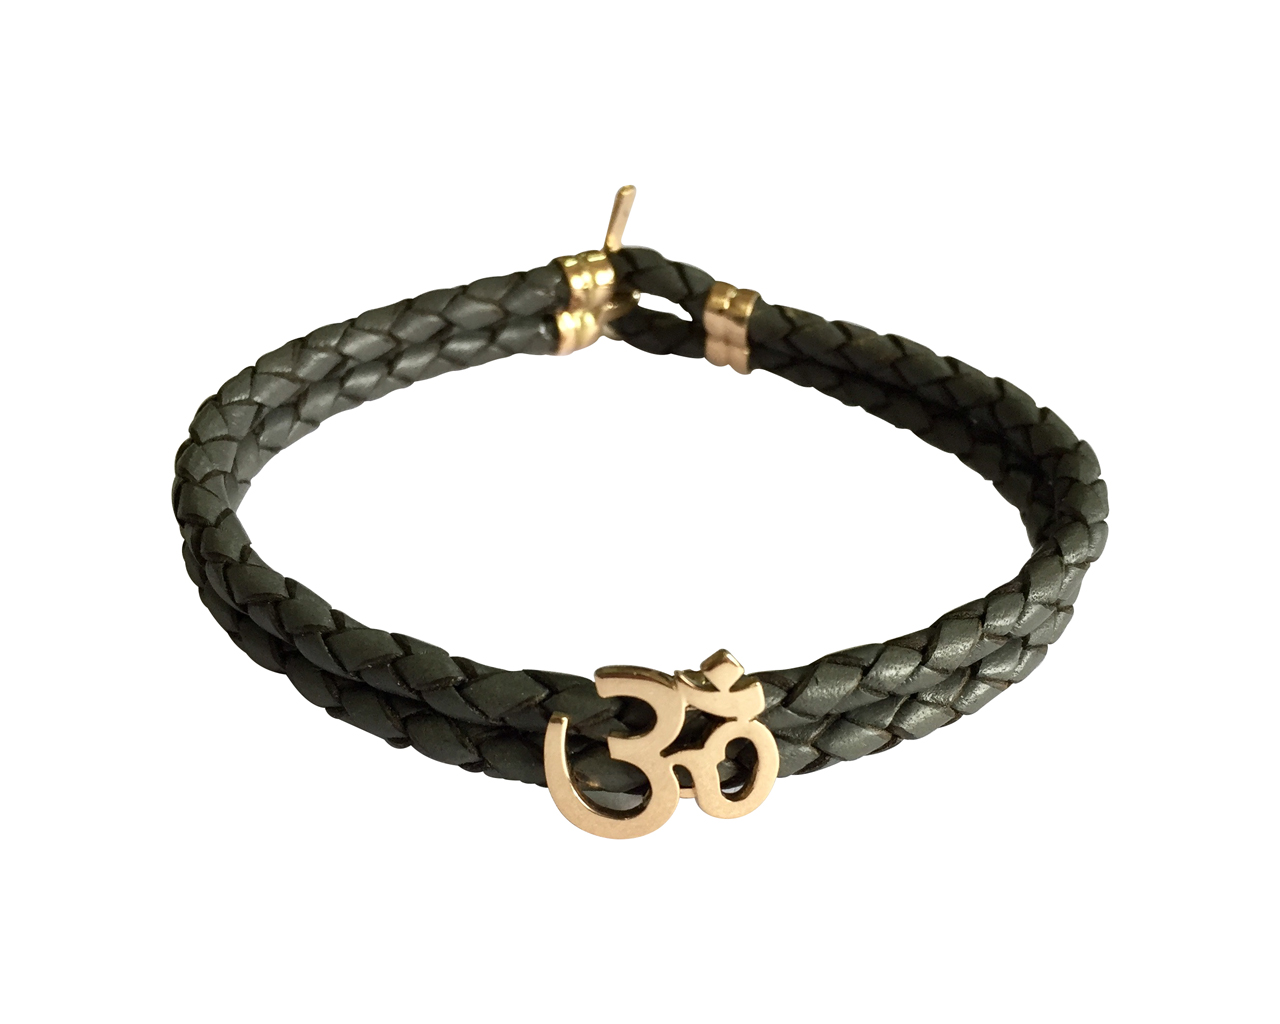 Buy Eigso 4Pcs Black Leather Bracelet for Men Women Adjustable Hematite  Punk Spike Metal Cuff Bangle at Amazon.in